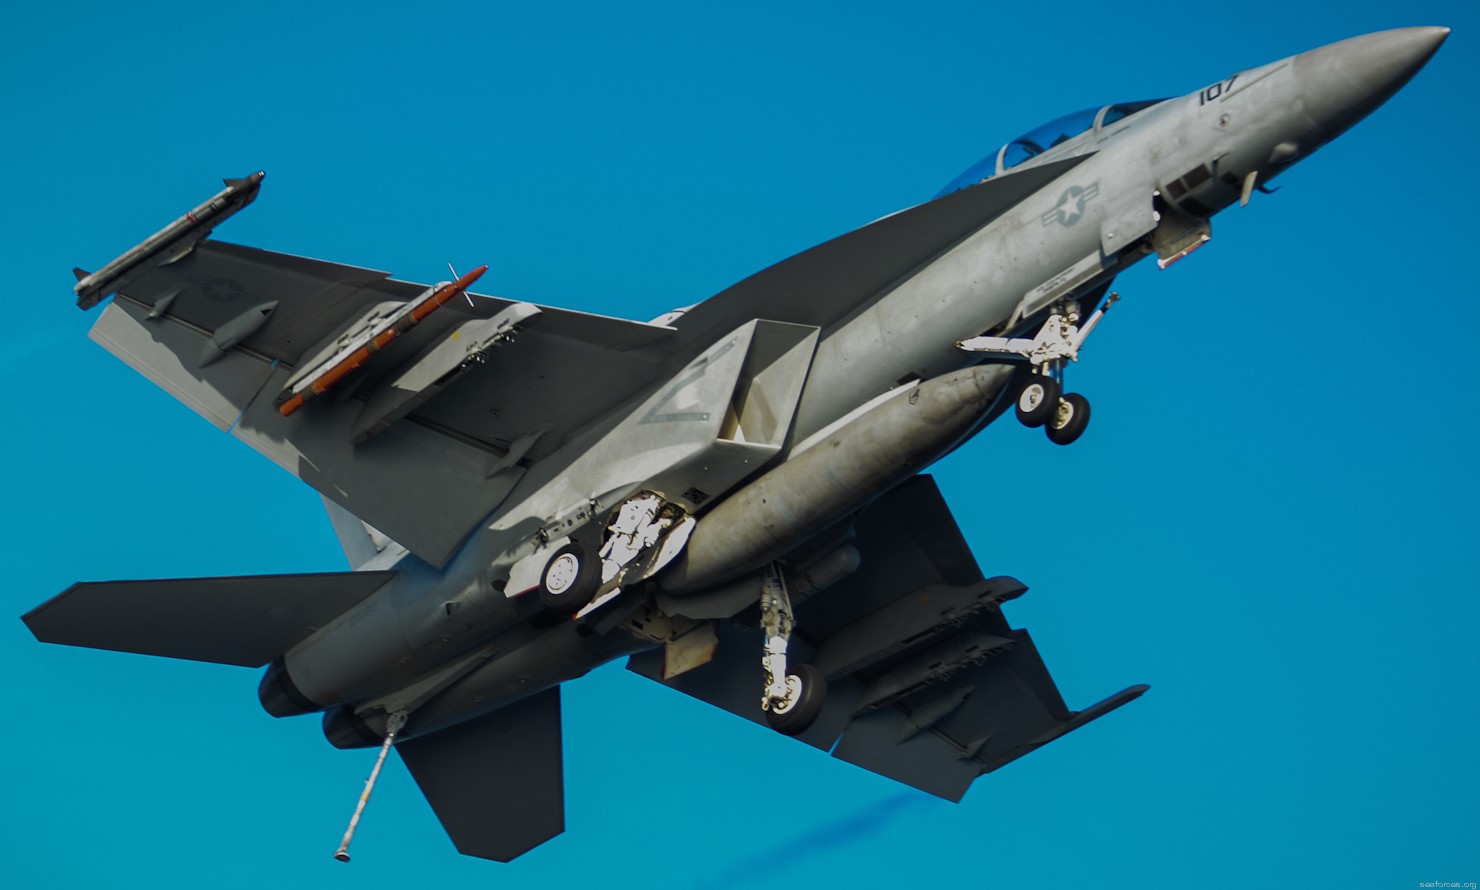 vfa-154 black knights strike fighter squadron navy f/a-18f super hornet carrier air wing cvw-11 uss nimitz cvn-68 131